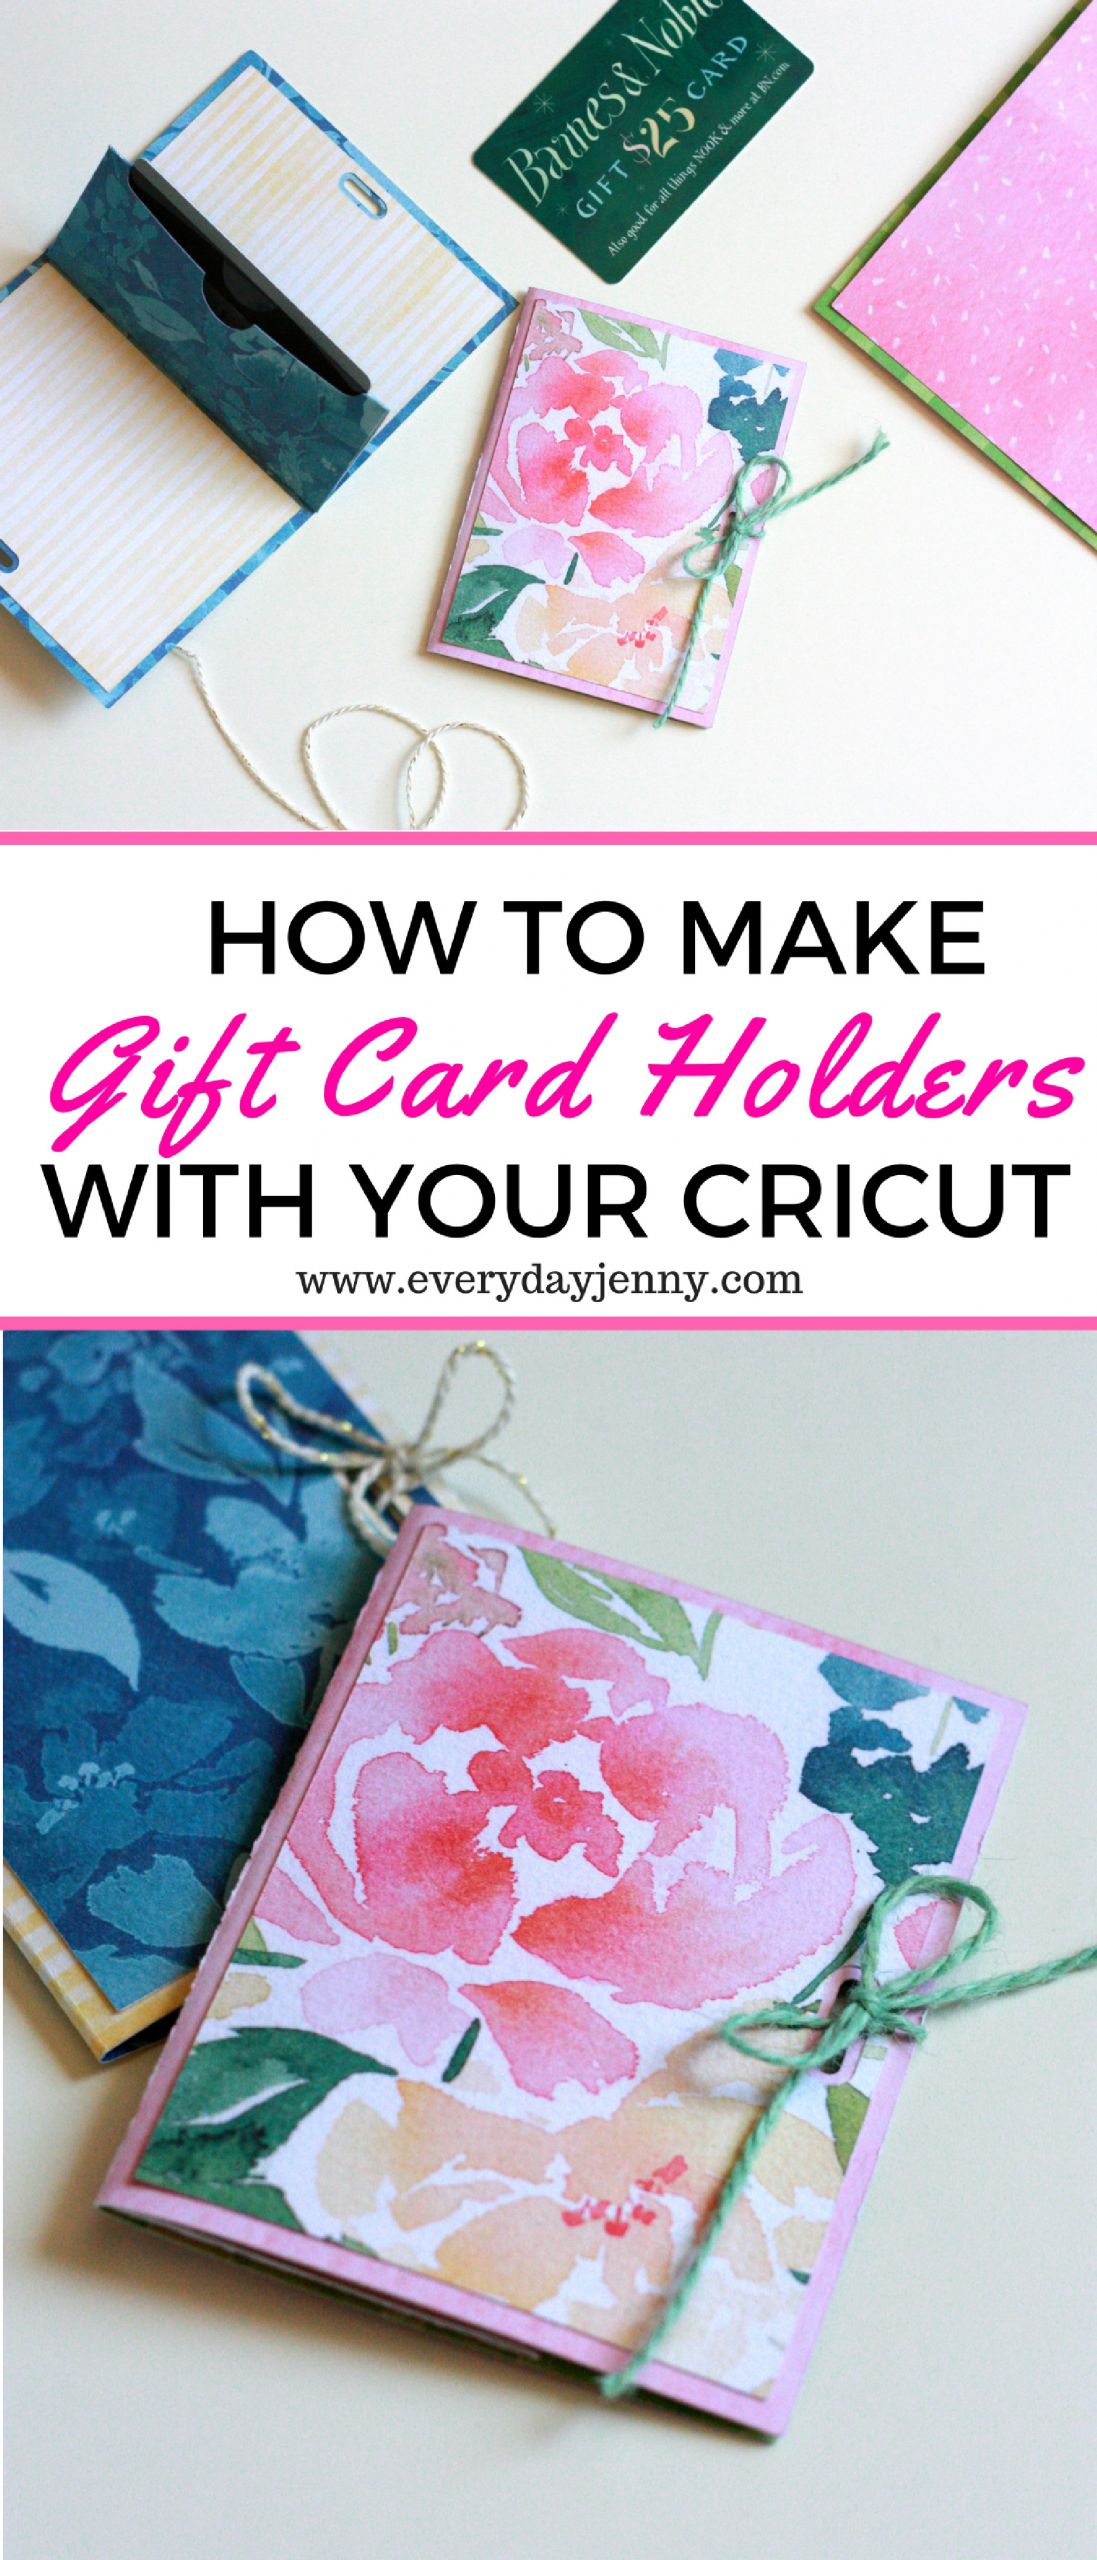 Gift Card Holder DIY
 DIY GIFT CARD HOLDER WITH CRICUT EXPLORE AIR 2